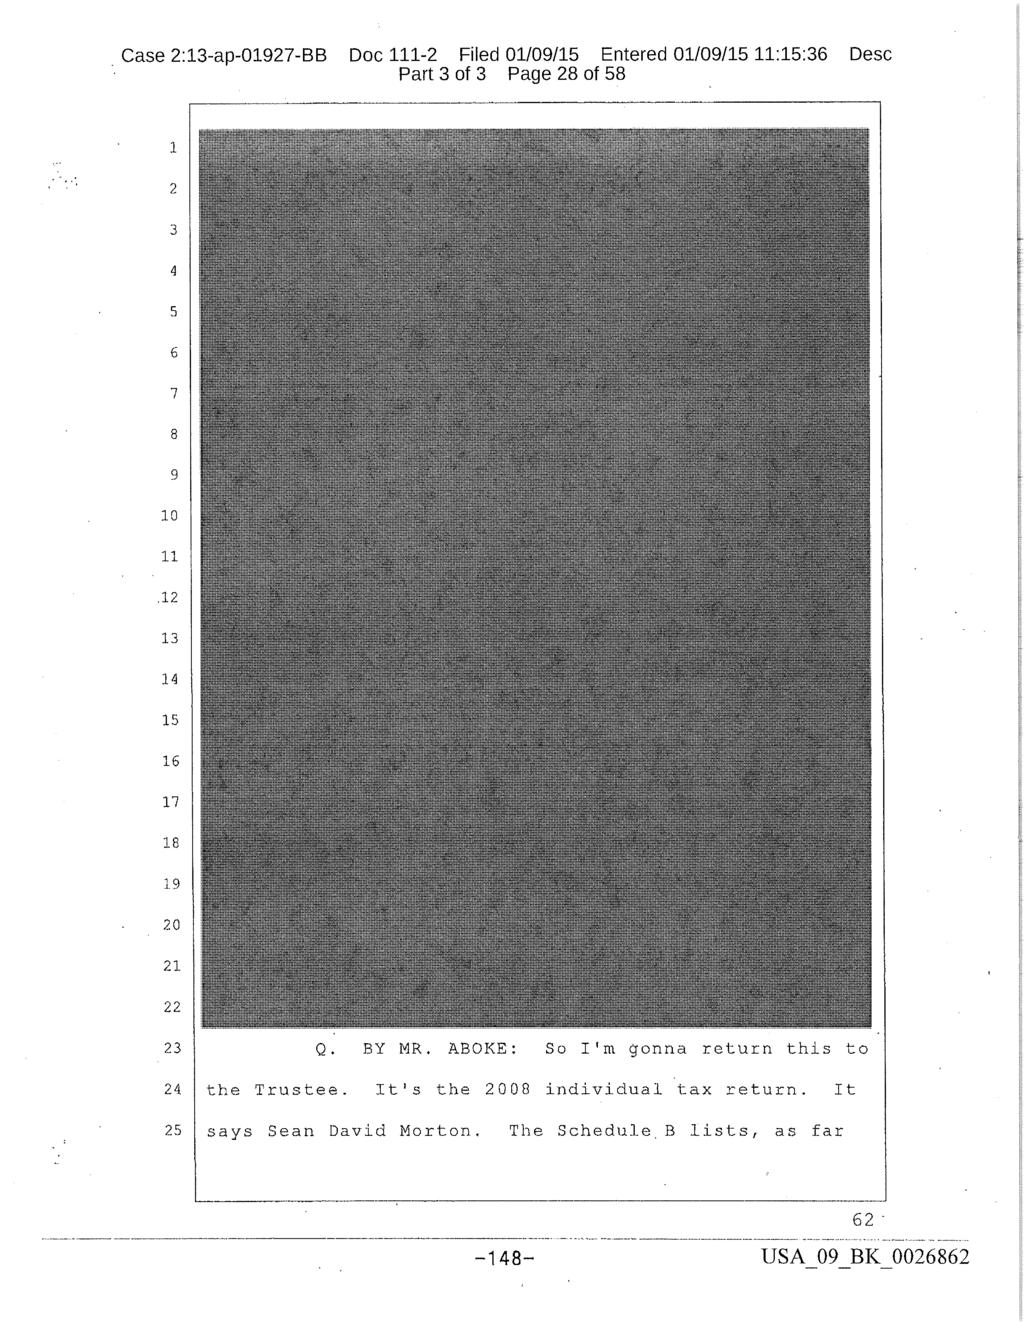 Case 2:15-cr-00611-SVW Document 173